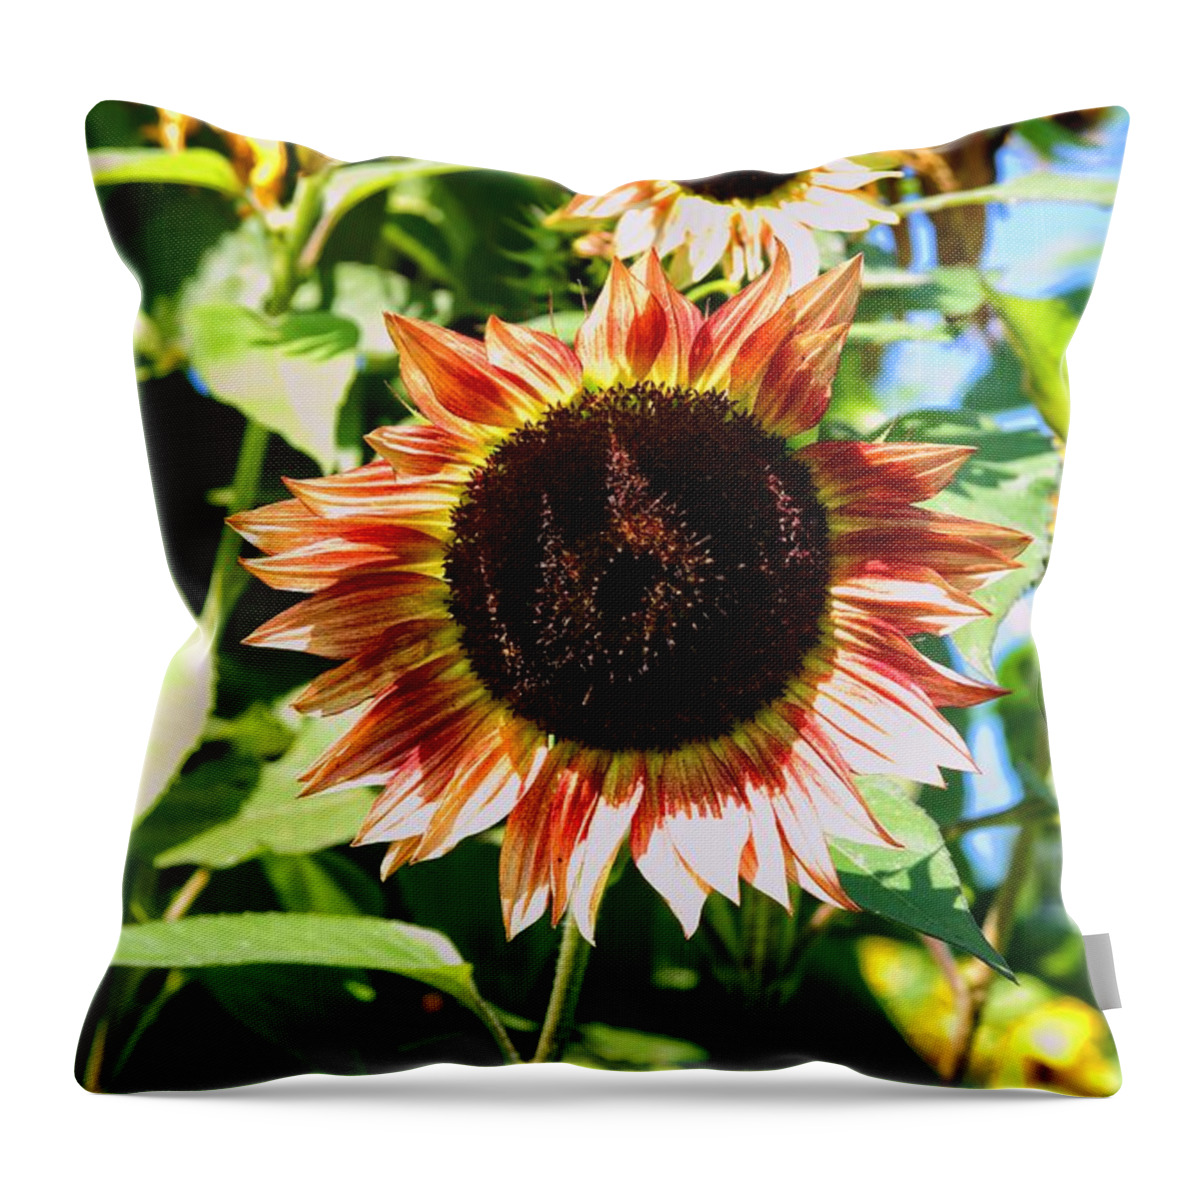 Sunflower Throw Pillow featuring the photograph Red Sunflower by Robert McCulloch